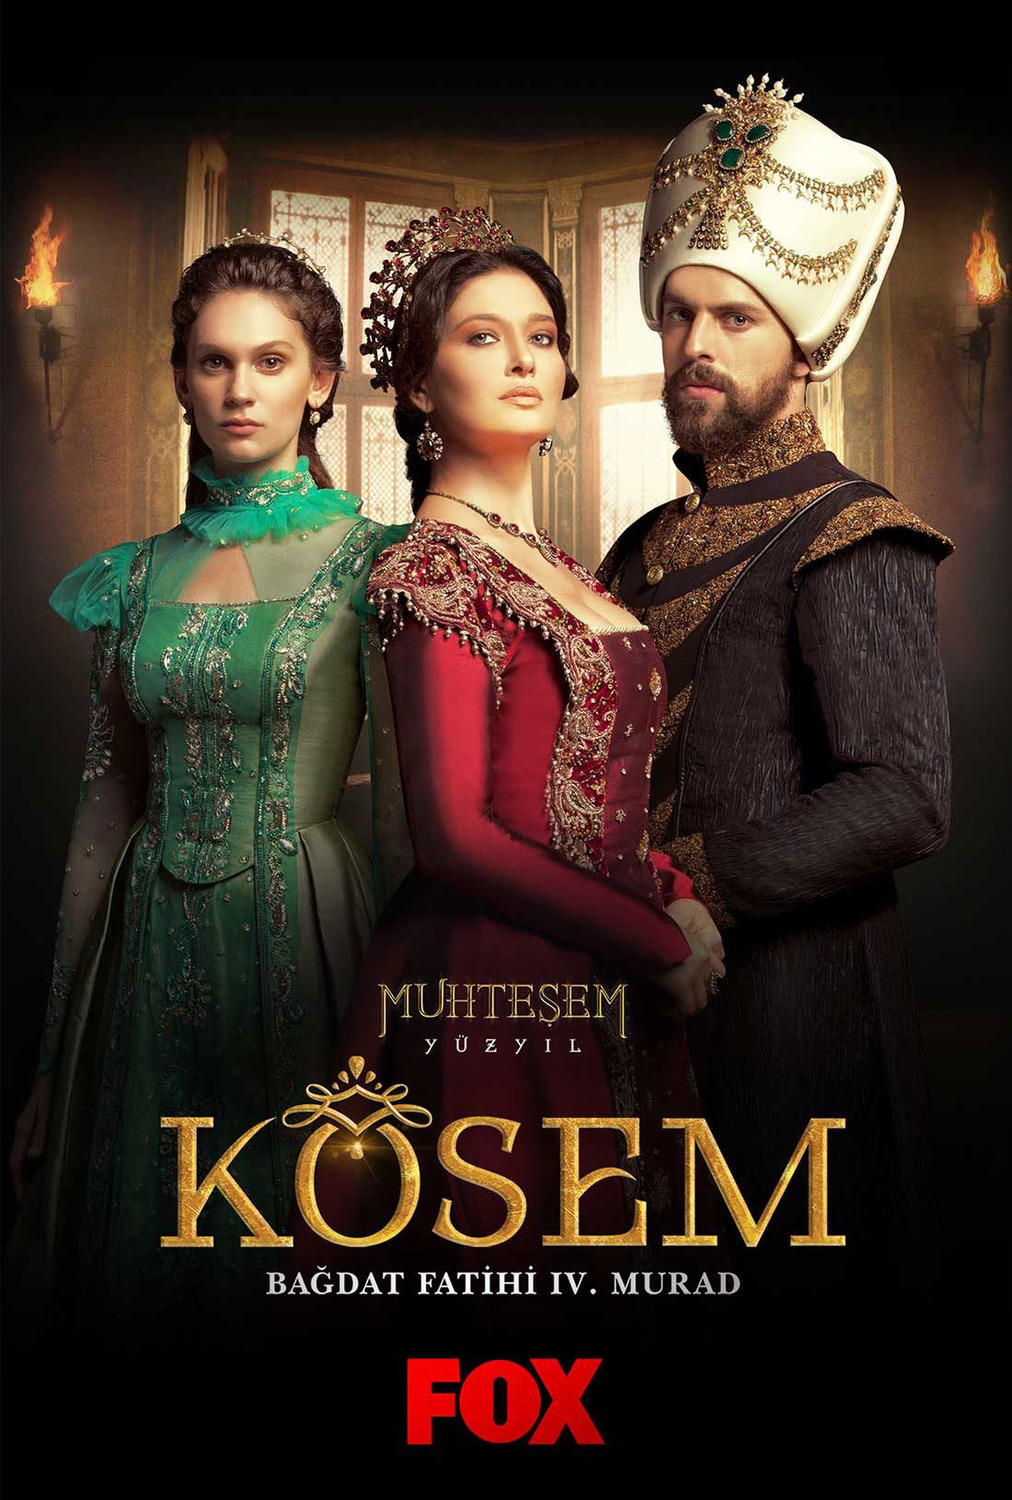 Extra Large TV Poster Image for Muhtesem Yüzyil: Kösem (#7 of 10)